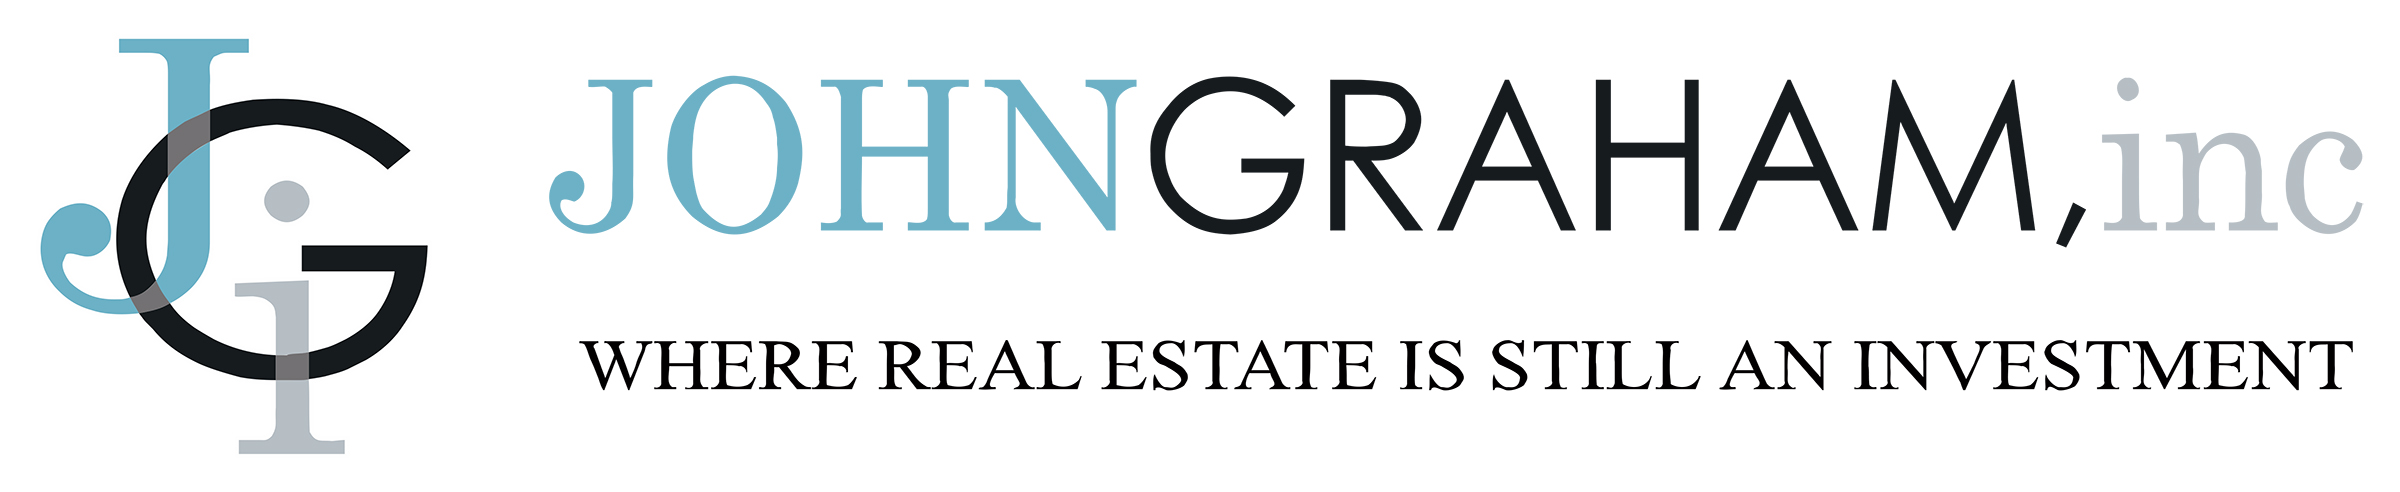 Nationally Ranked Real Estate Investment Firm, John Graham, Inc ...